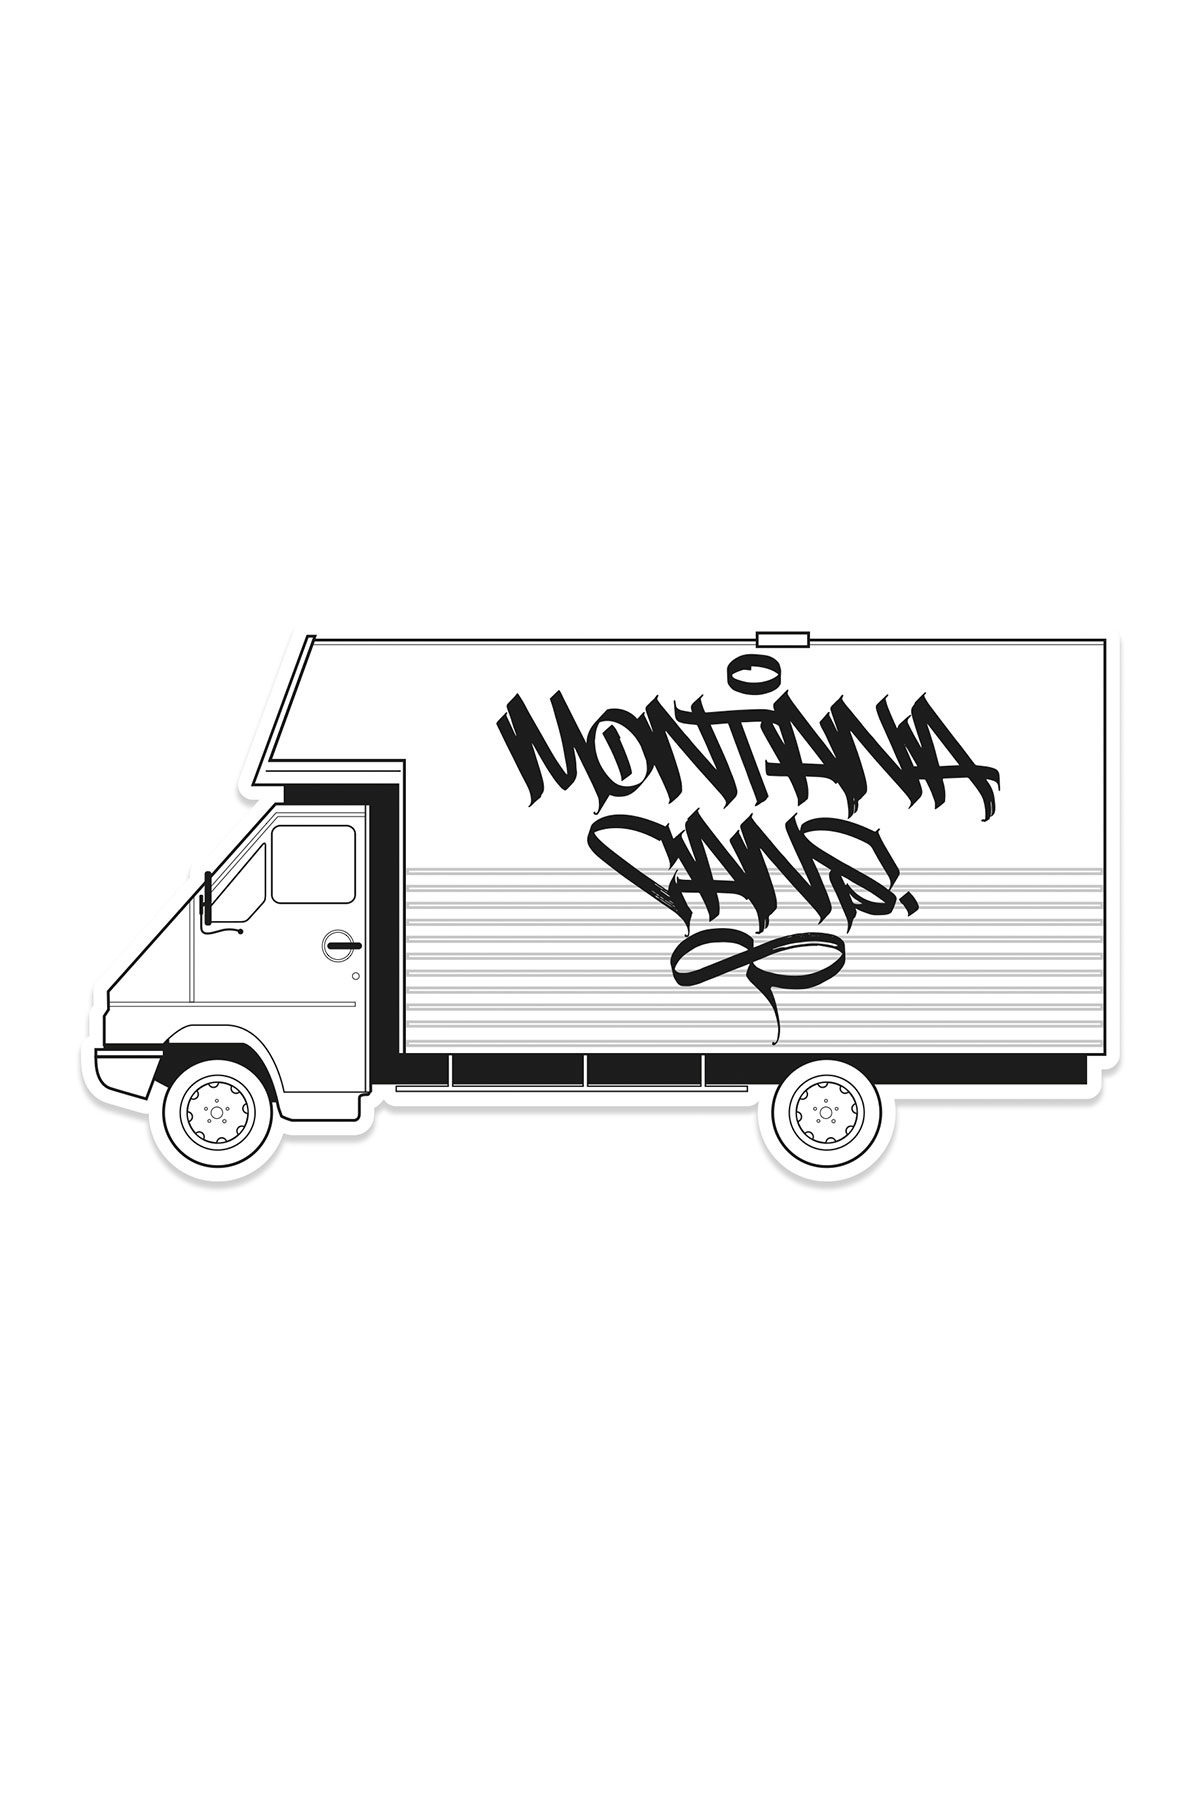 Montana sticker set